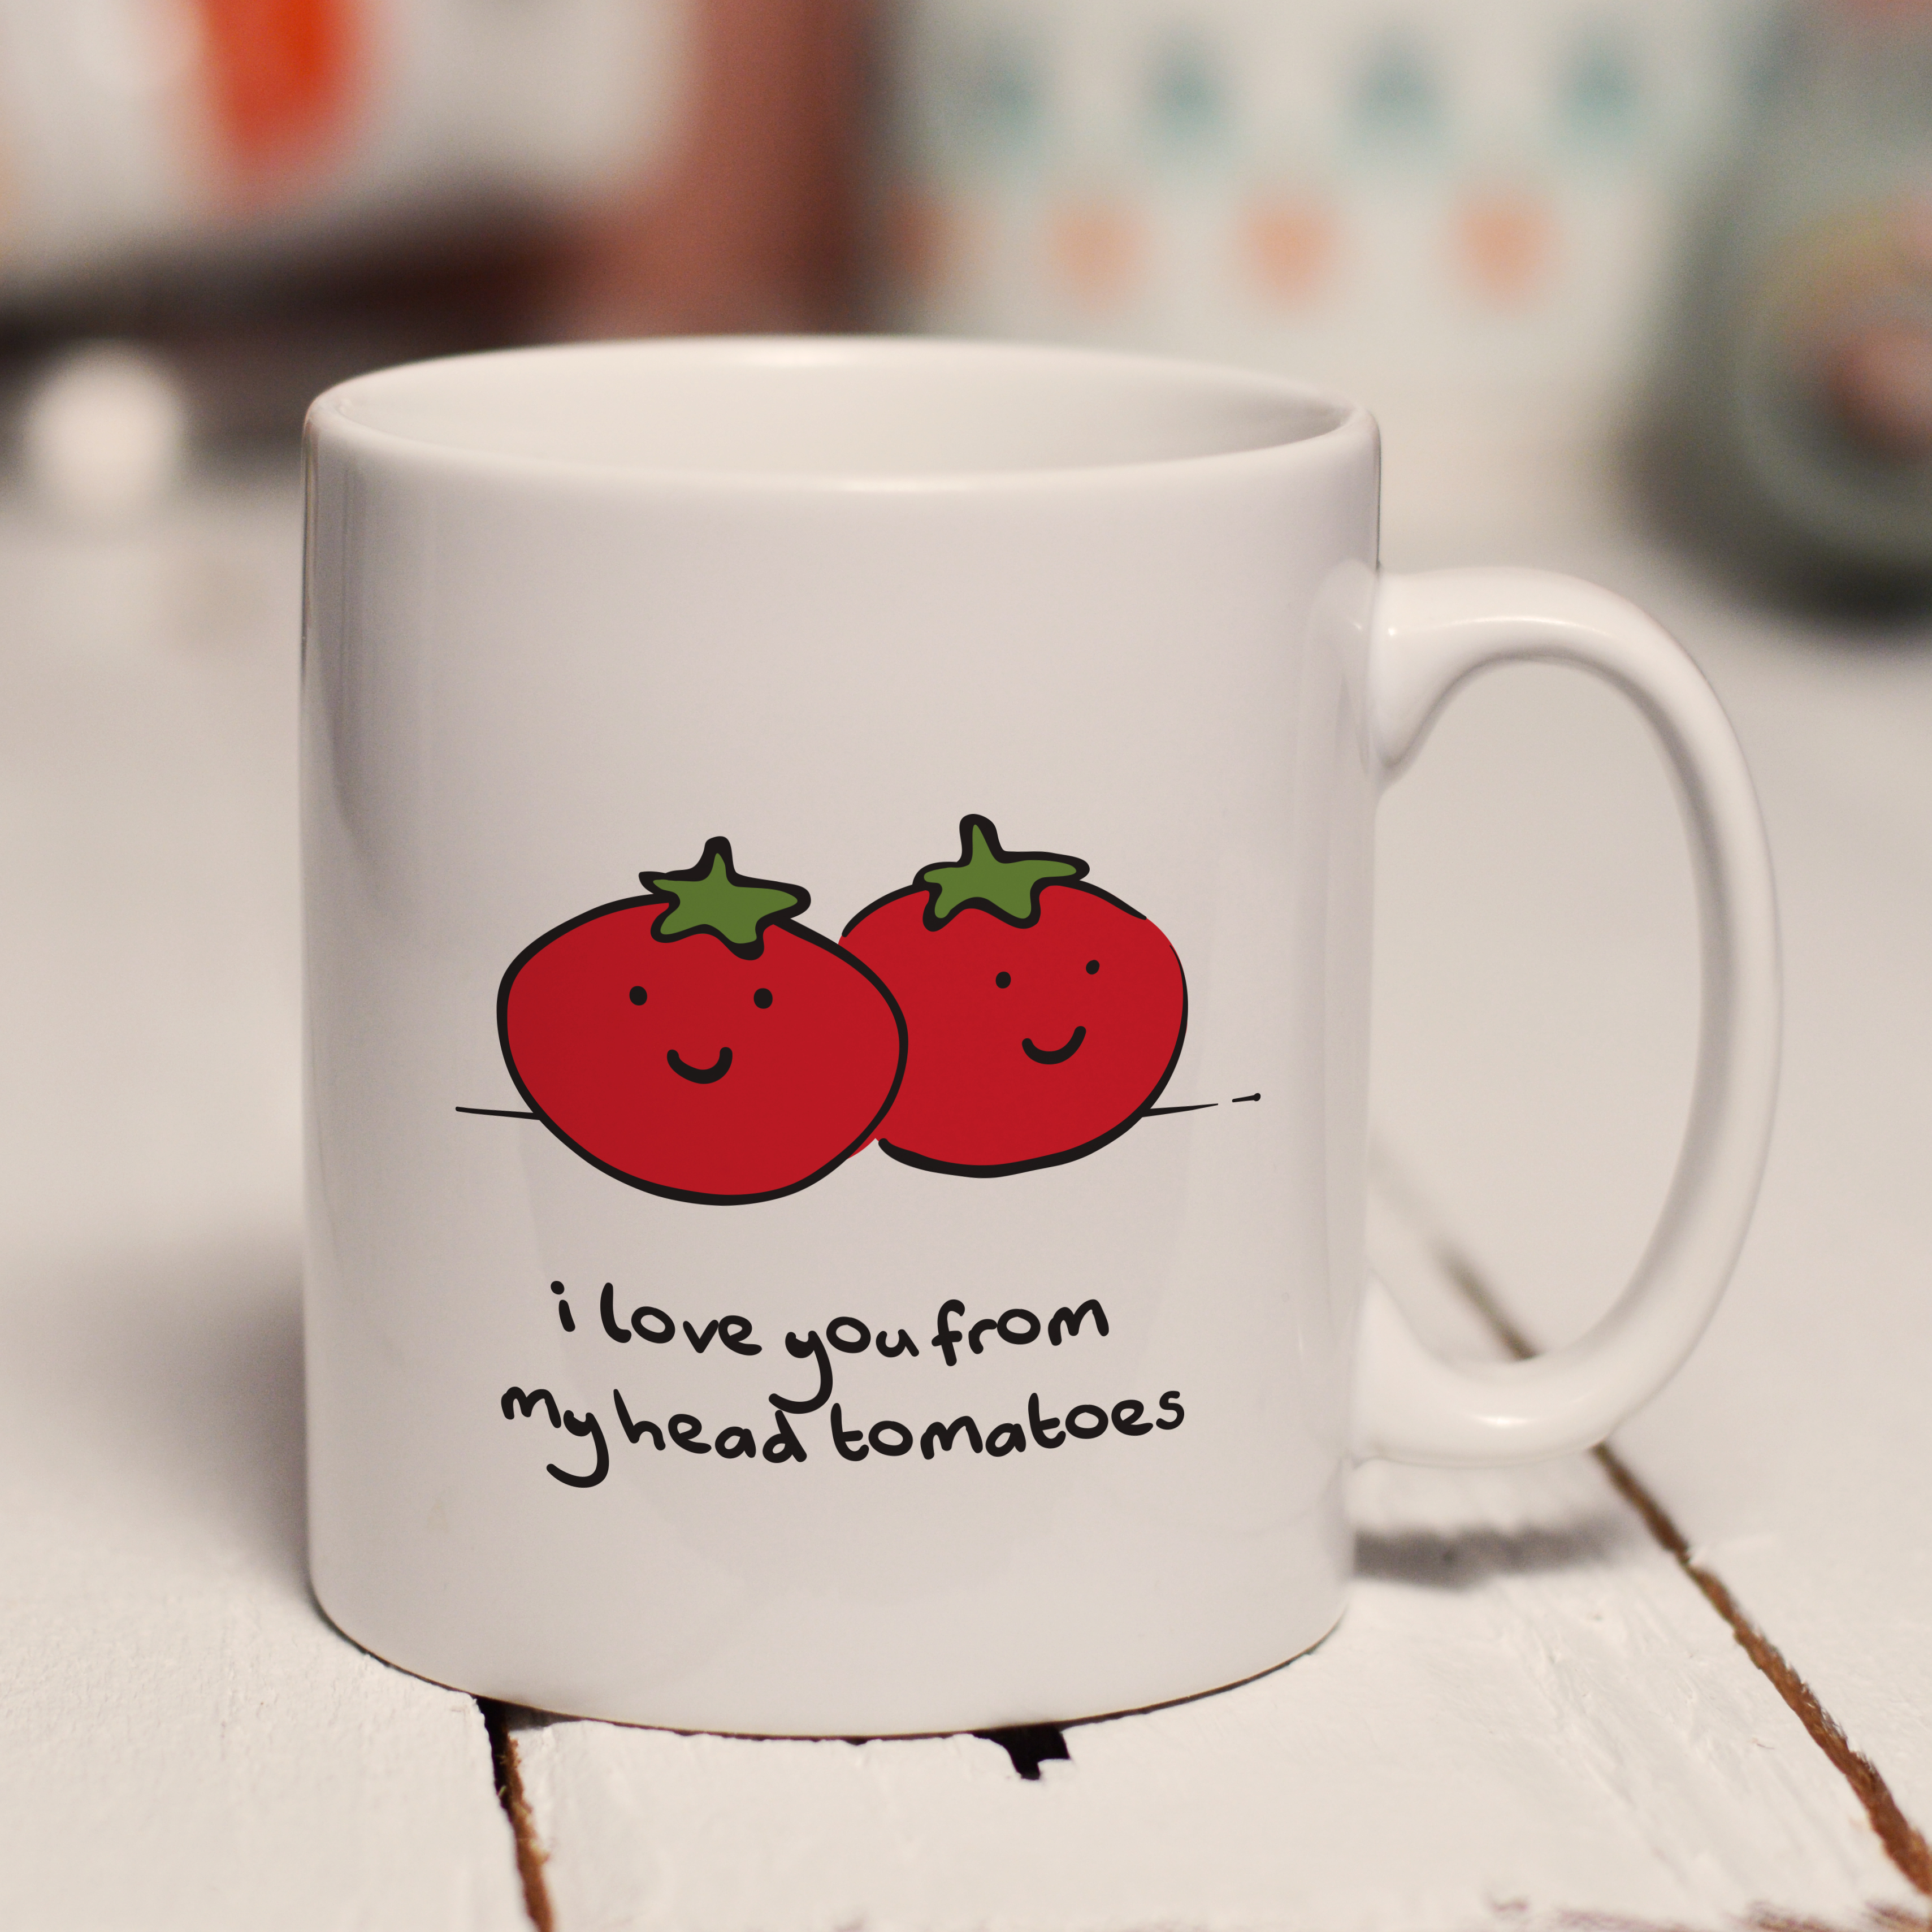 I love you from my head tomatoes mug